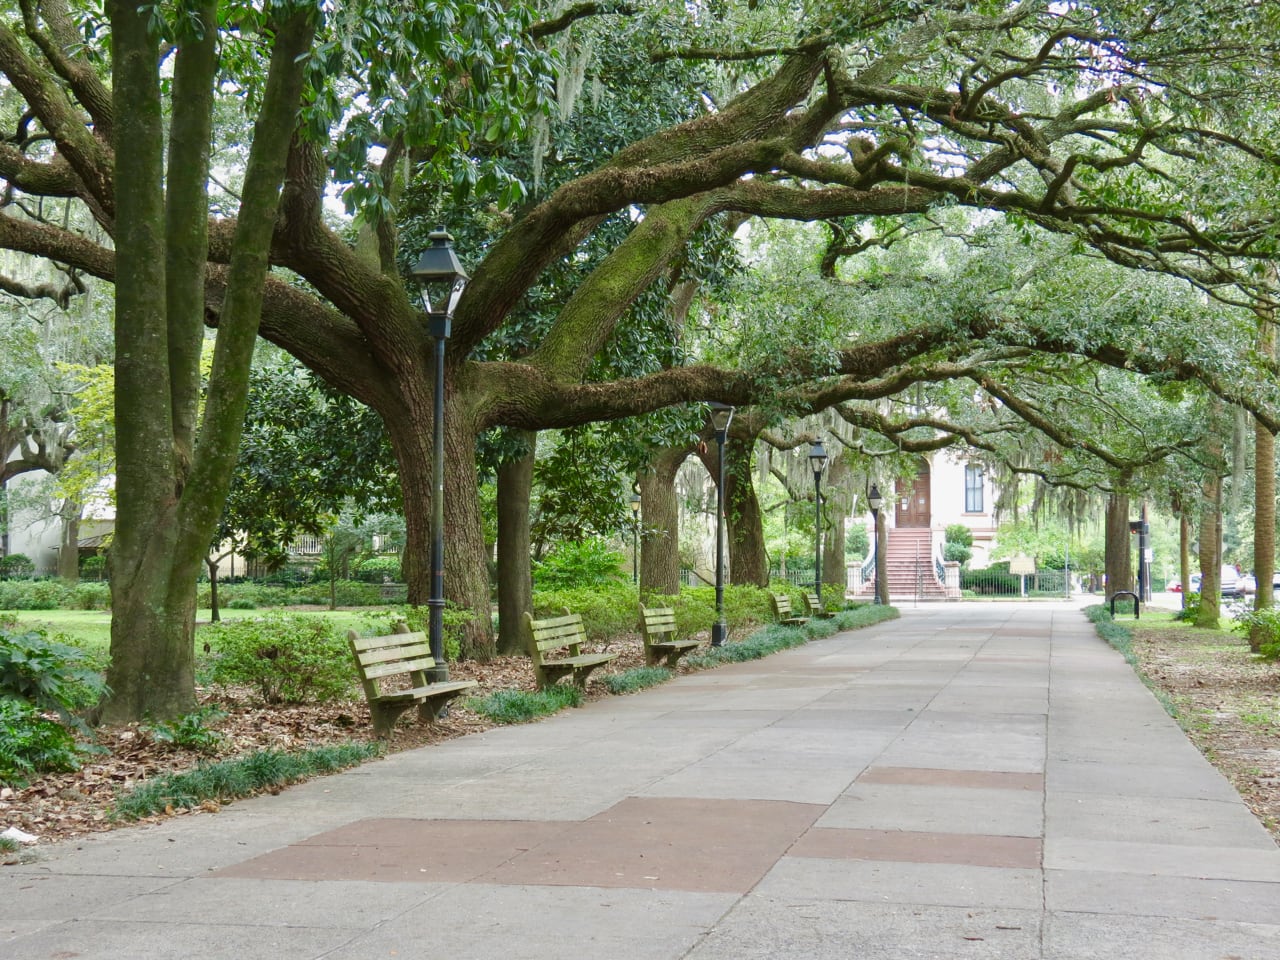 The Oaks of Savannah